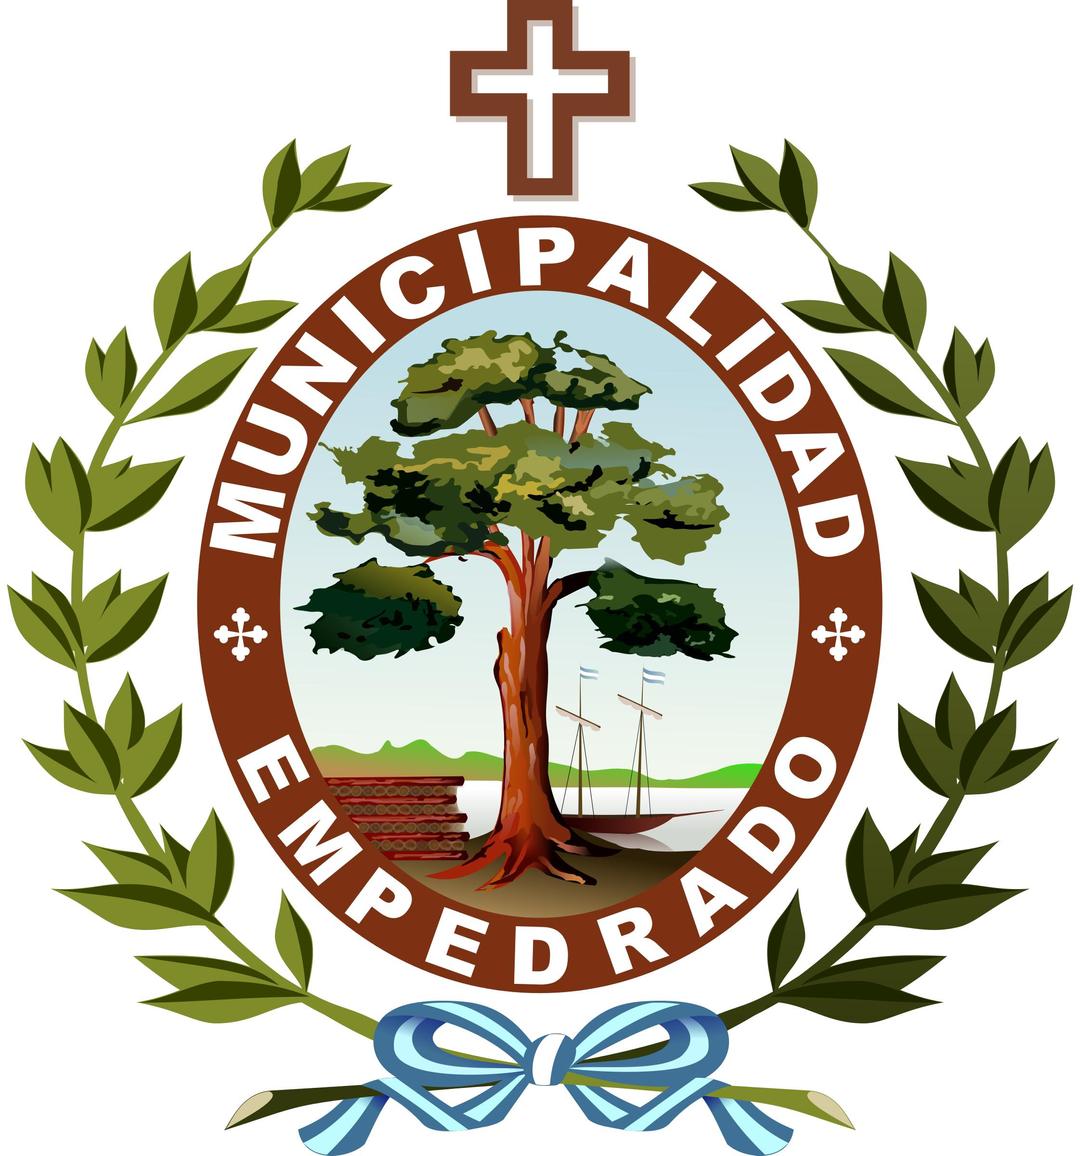 Escudo de la Municipalidad de Empedrado png transparent